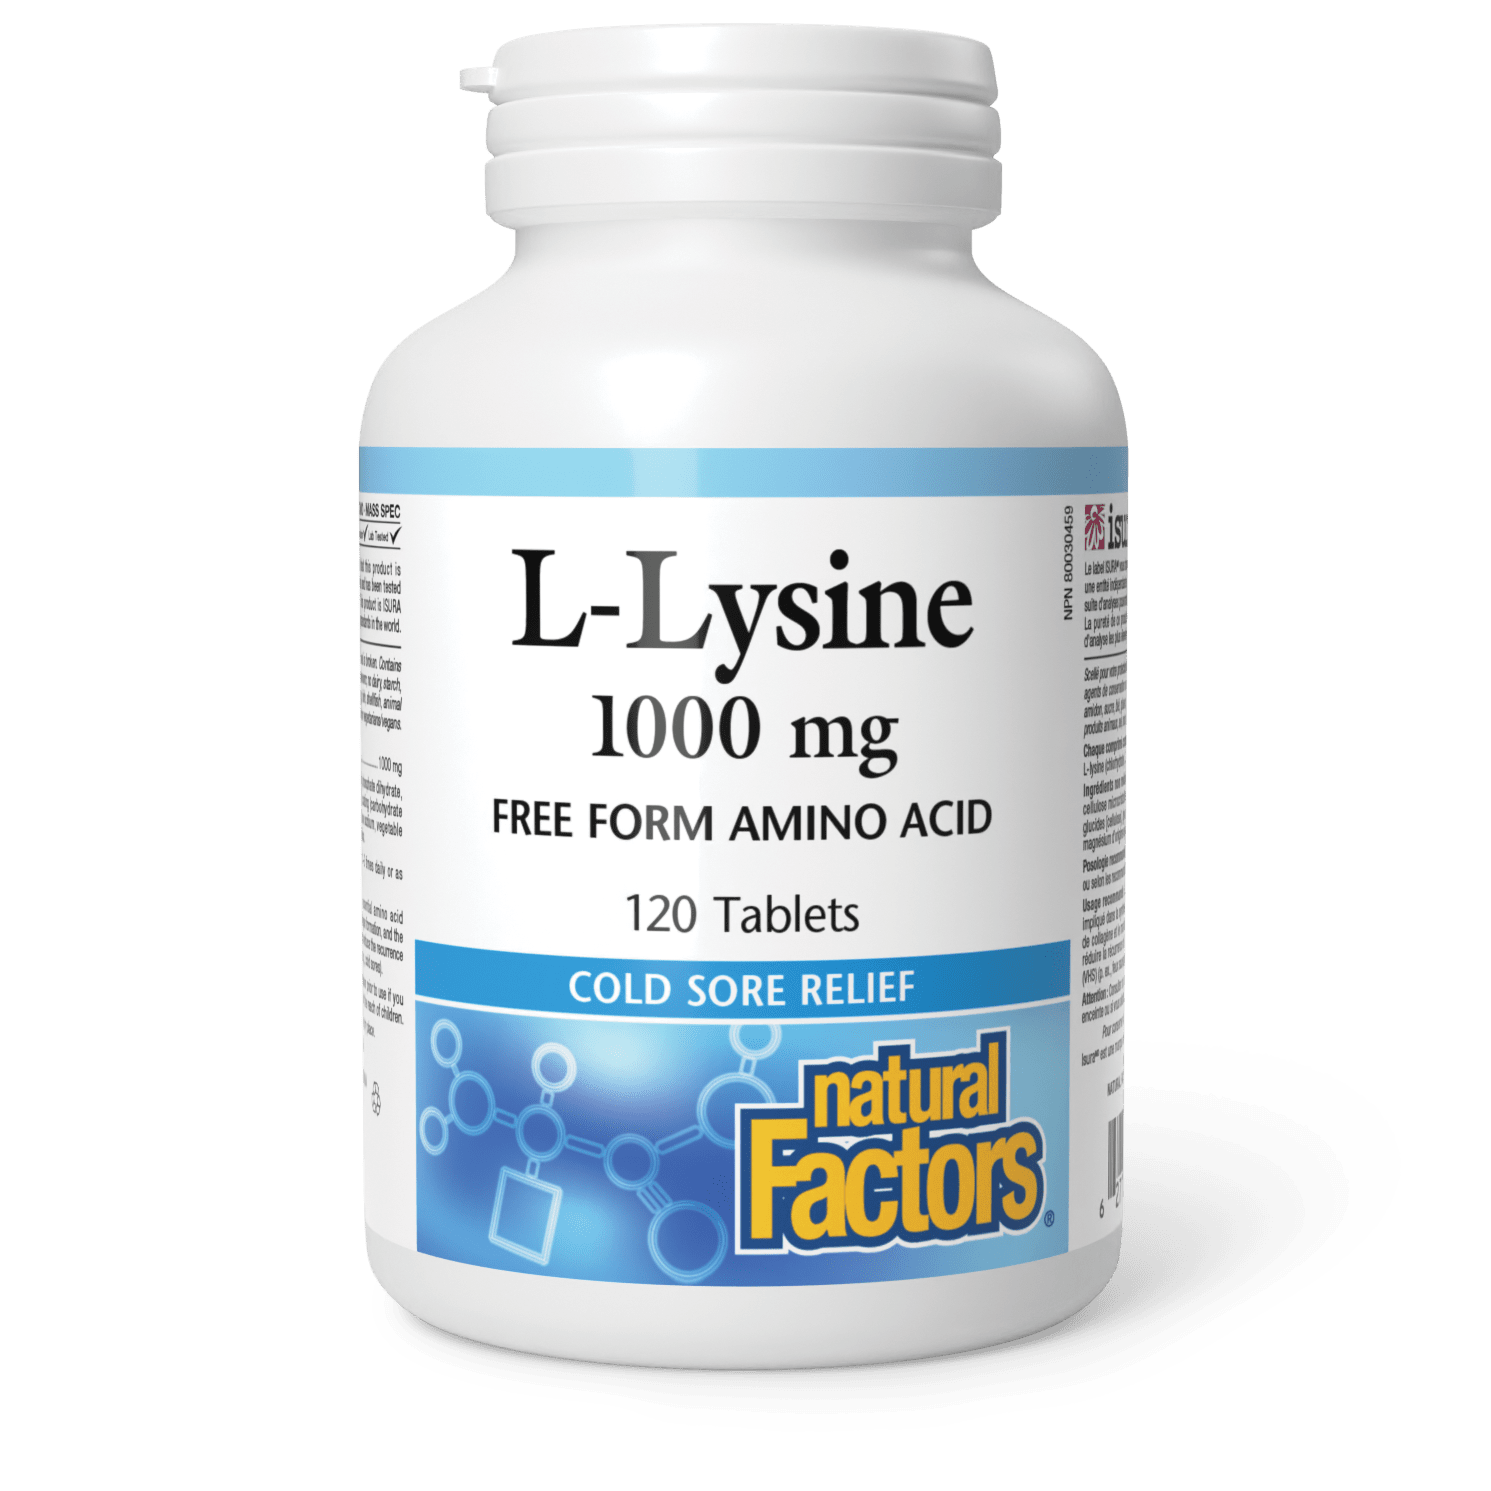 L-Lysine 1000 mg, Natural Factors|v|image|2860